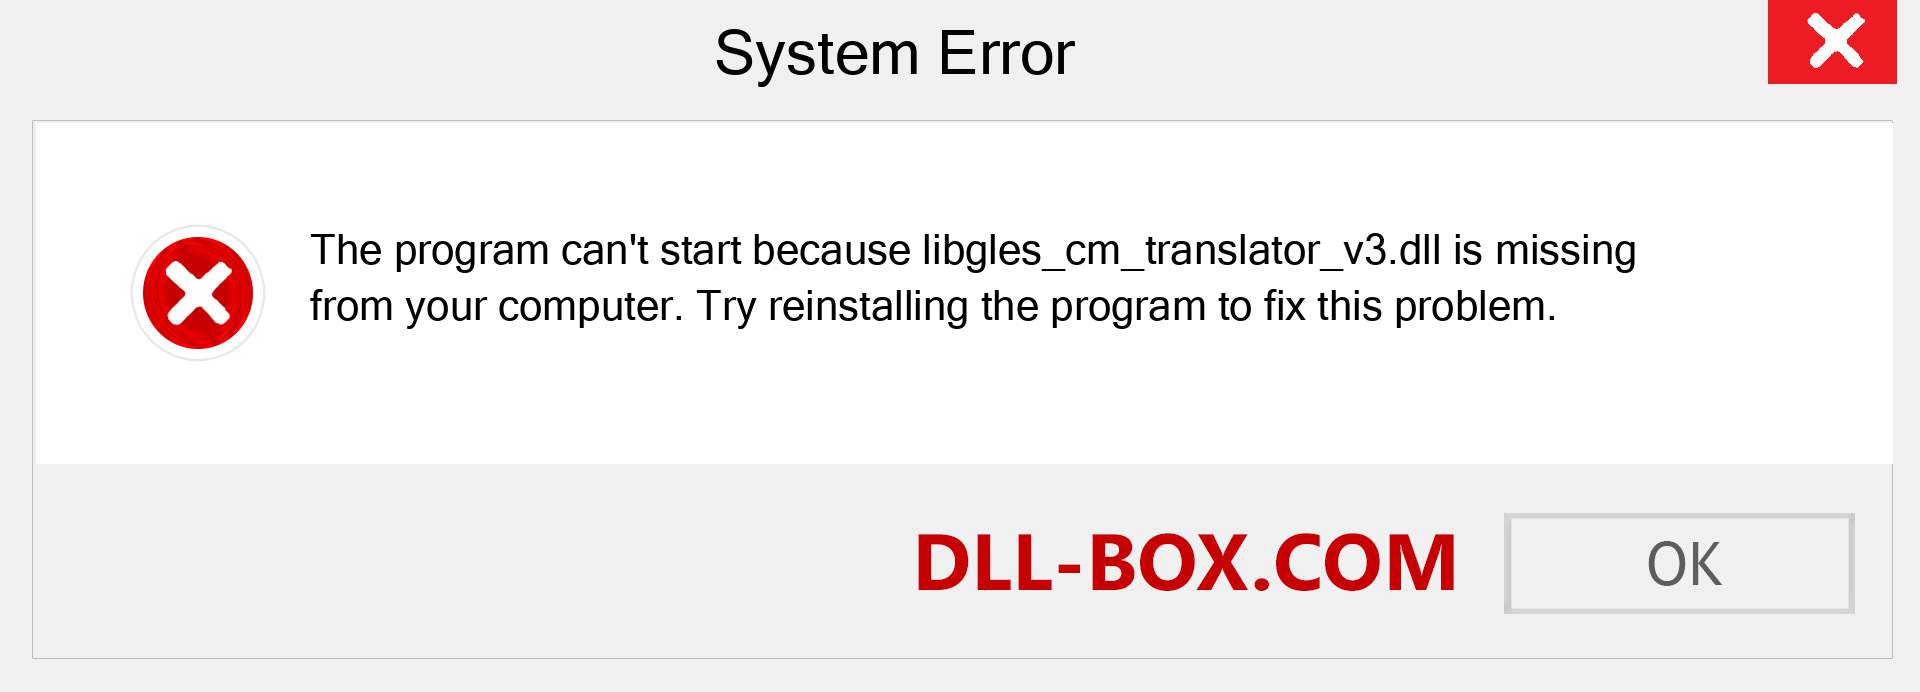  libgles_cm_translator_v3.dll file is missing?. Download for Windows 7, 8, 10 - Fix  libgles_cm_translator_v3 dll Missing Error on Windows, photos, images